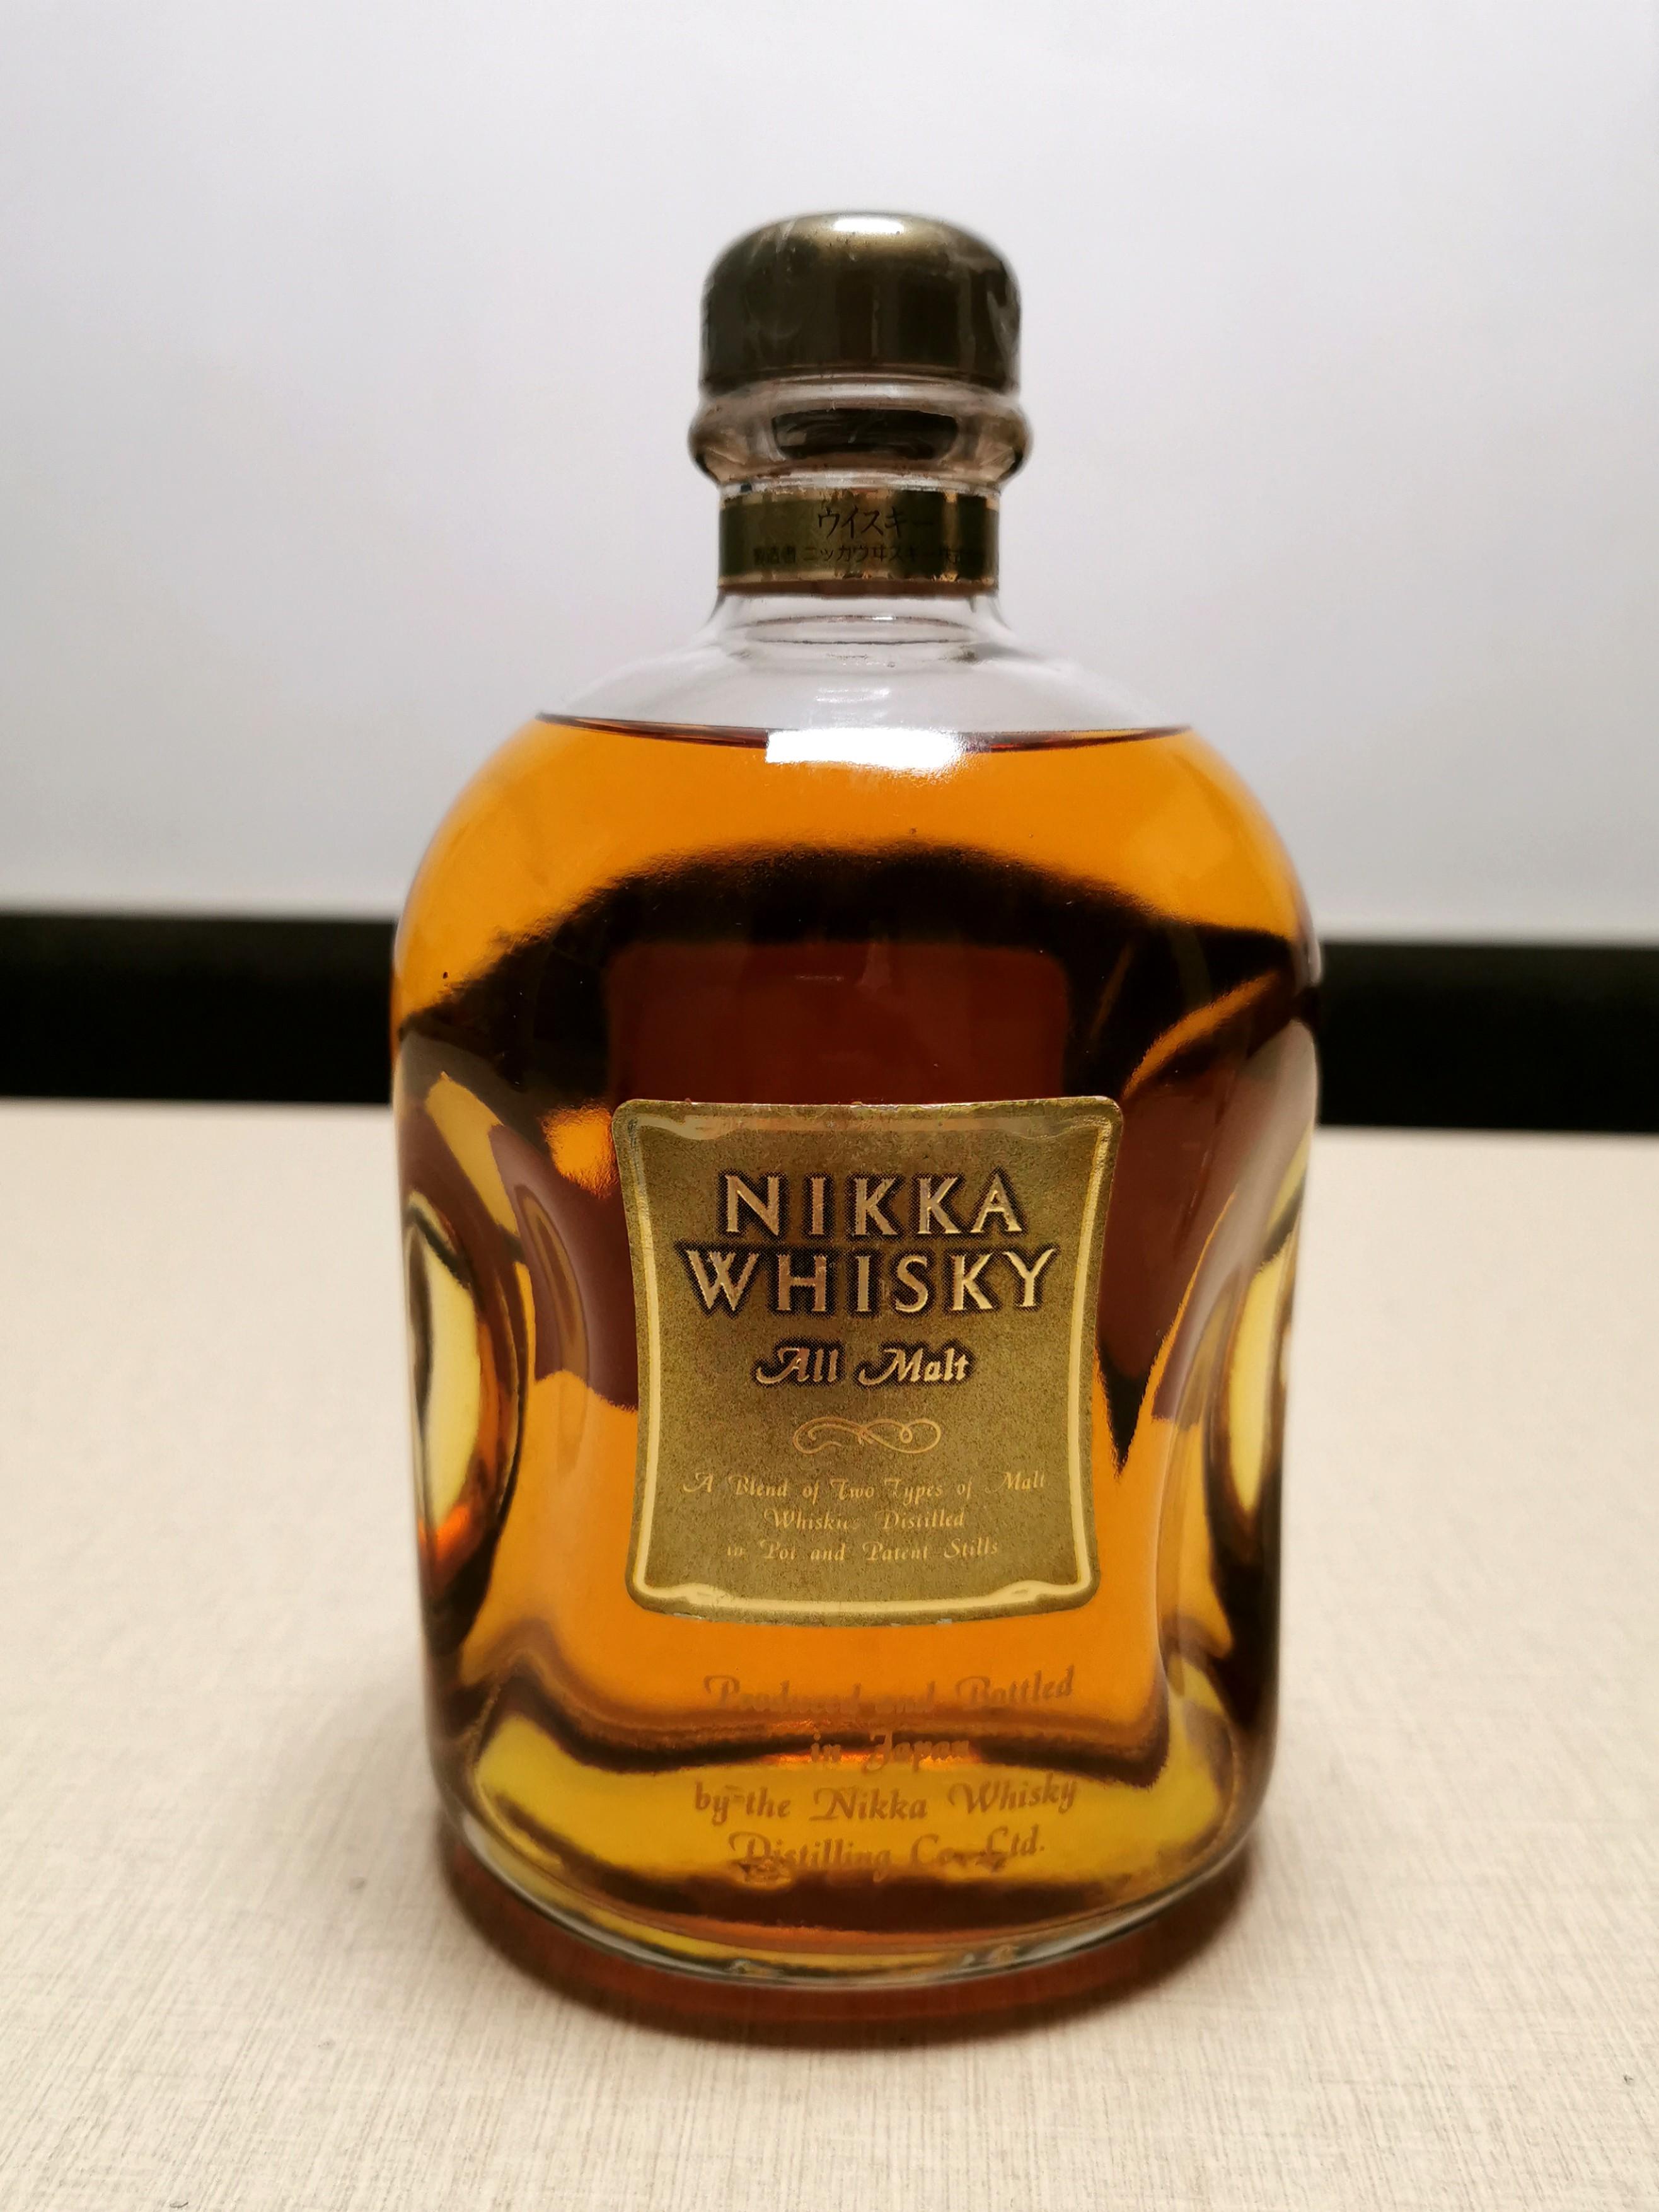 Nikka日果竹鶴whisky (All malt )750ml👍, 嘢食& 嘢飲, 酒精飲料